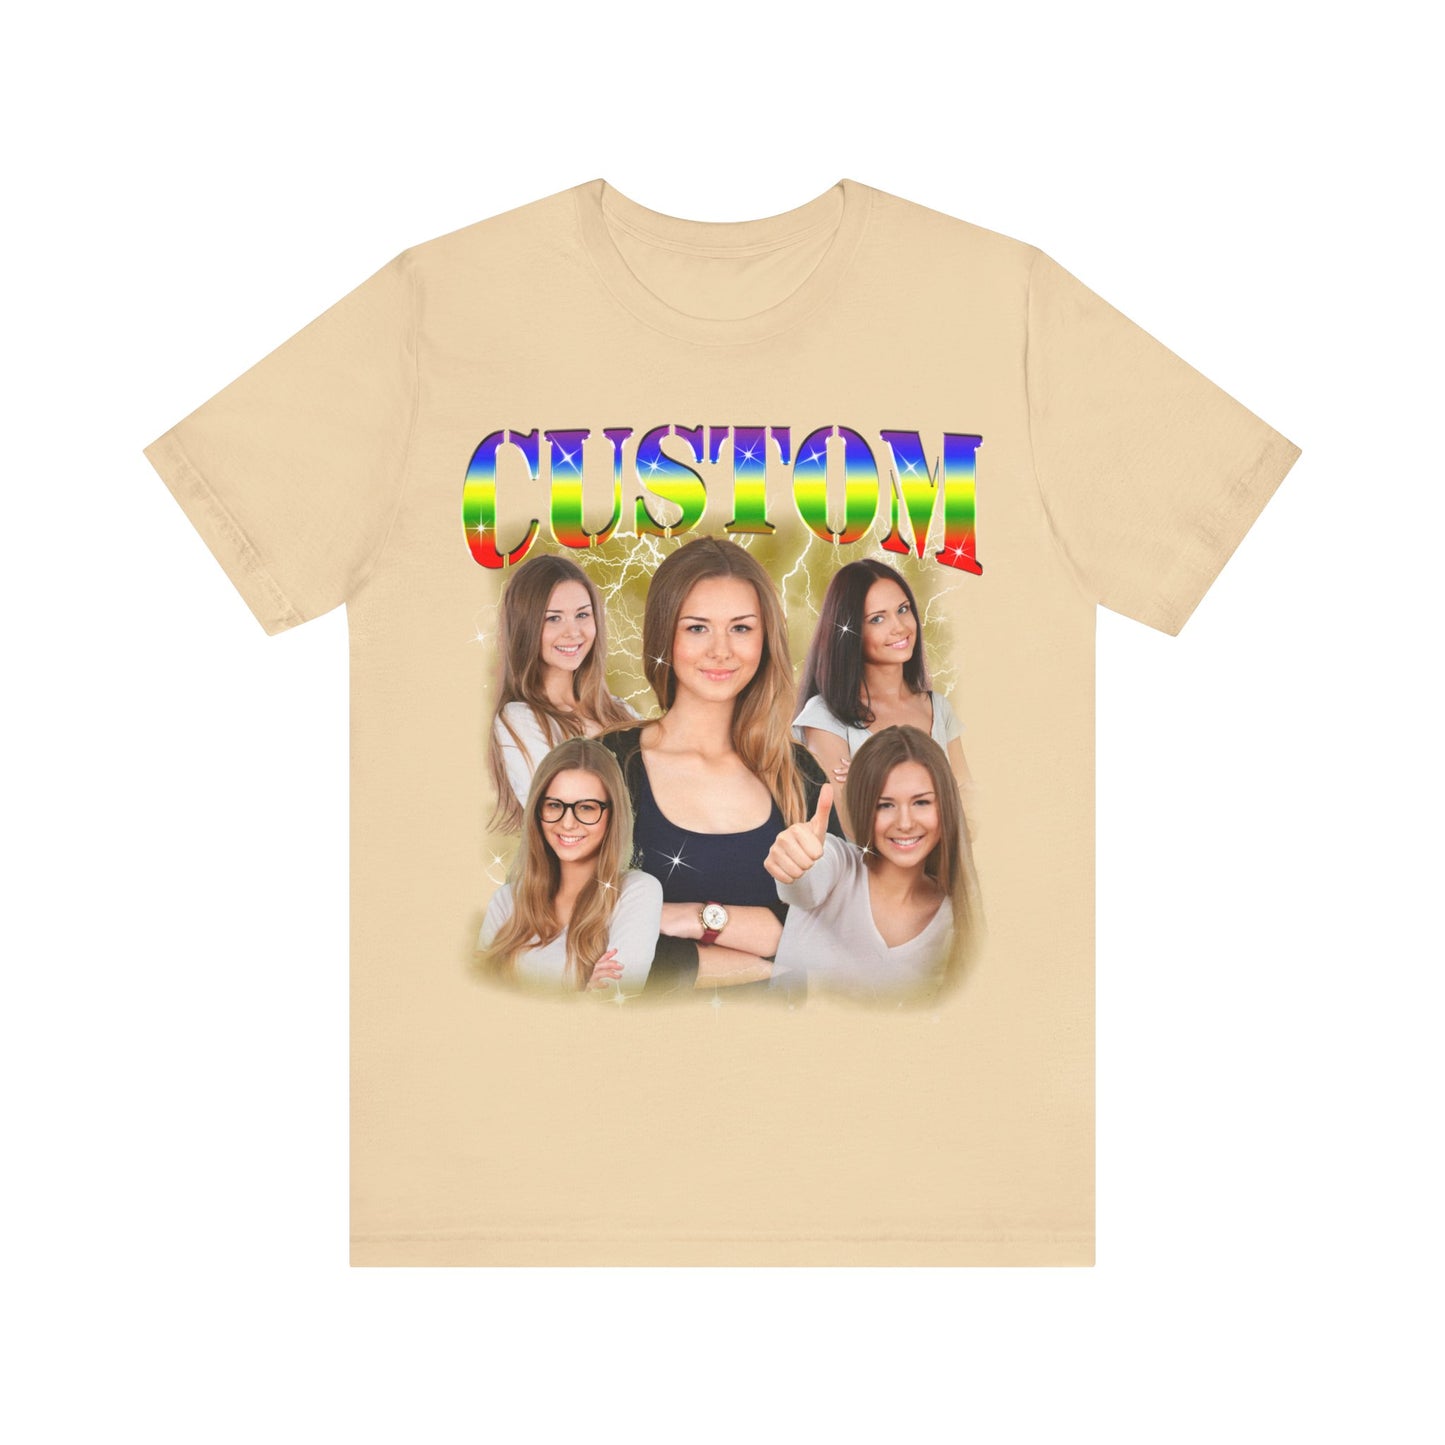 Custom Photo Bootleg Girlfriend Rainbow 90s Retro Vintage T-Shirt, Shirt with Face for Boyfriend Birthday Gift, Pictures Bootleg Tee, T1528